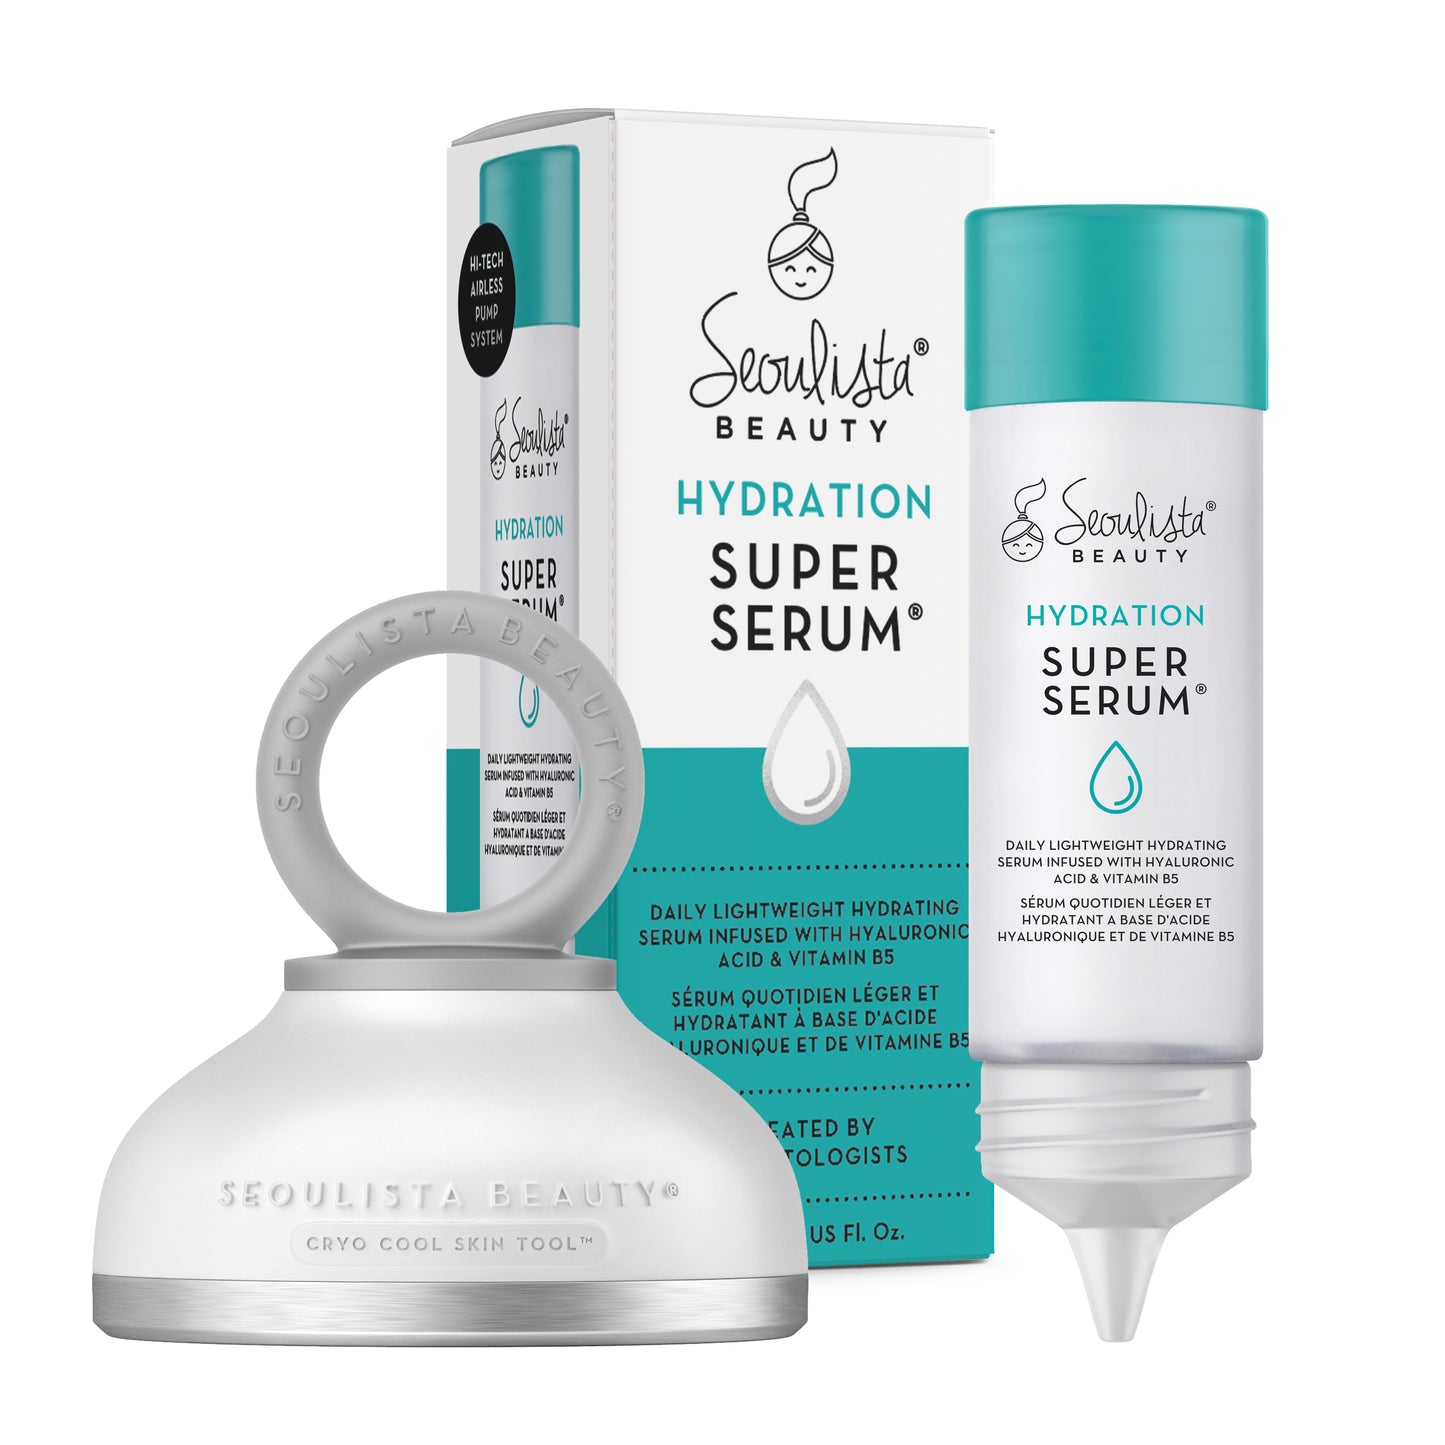 Seoulista Hydration Super Serum® - Seoulista Beauty